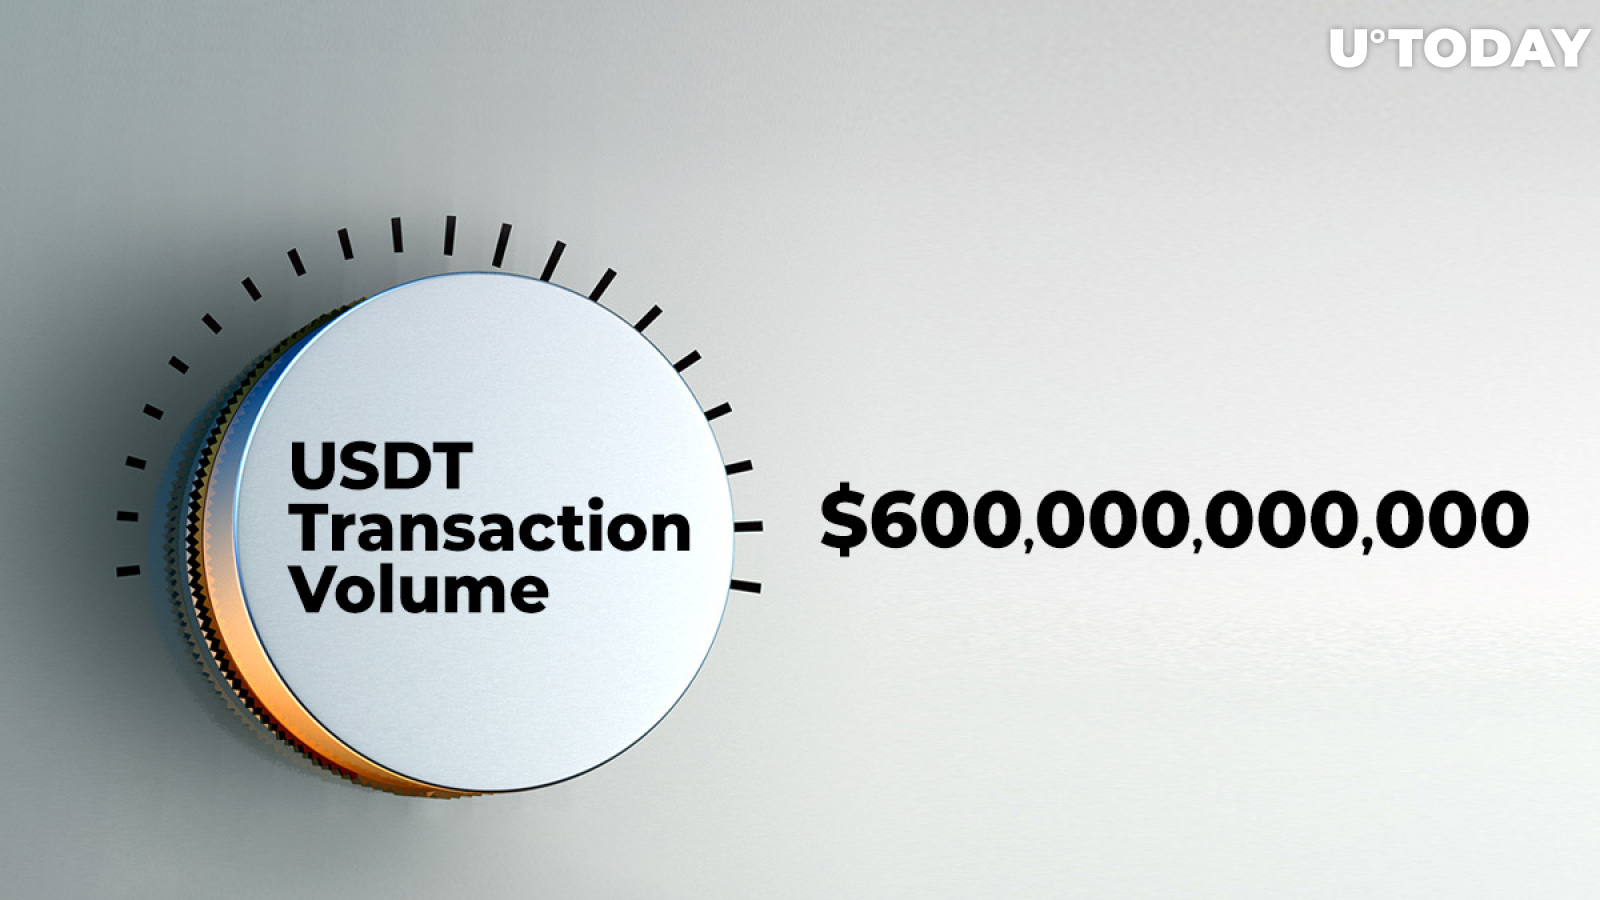 Cumulative USDT Transaction Volume Surpasses $600,000,000,000: Glassnode Data